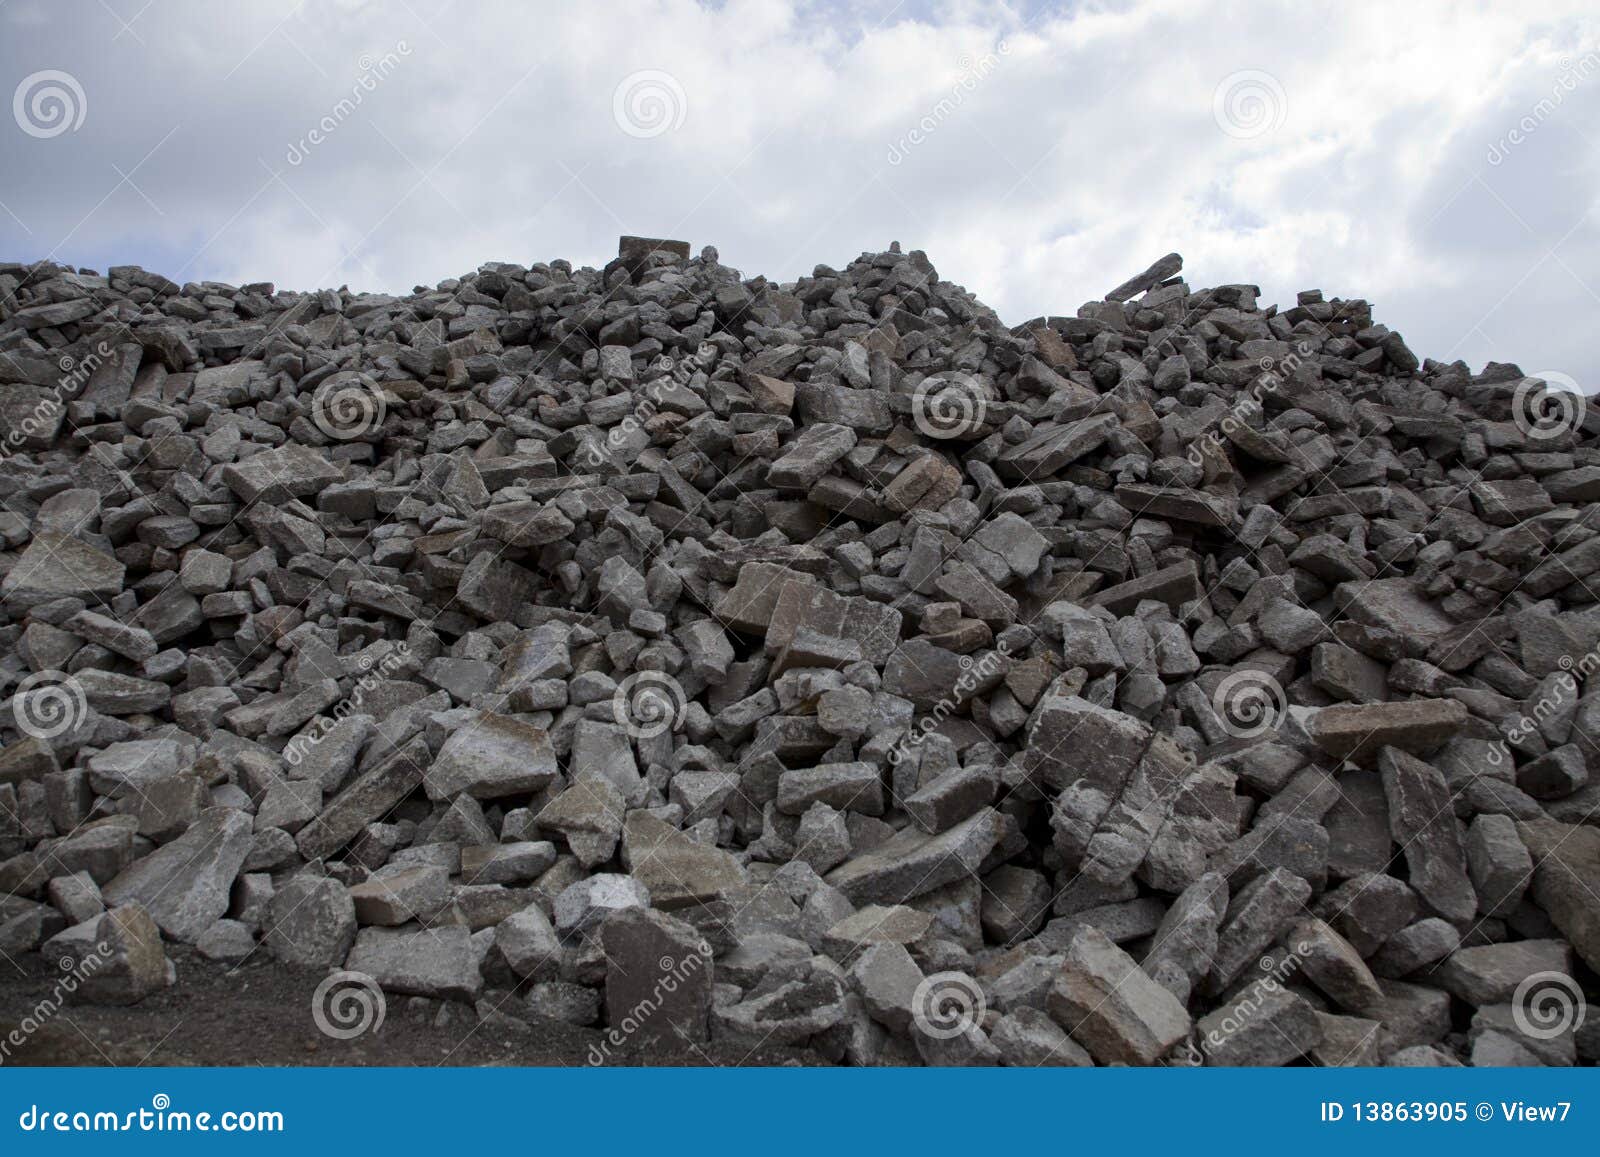 pile of brick rubble